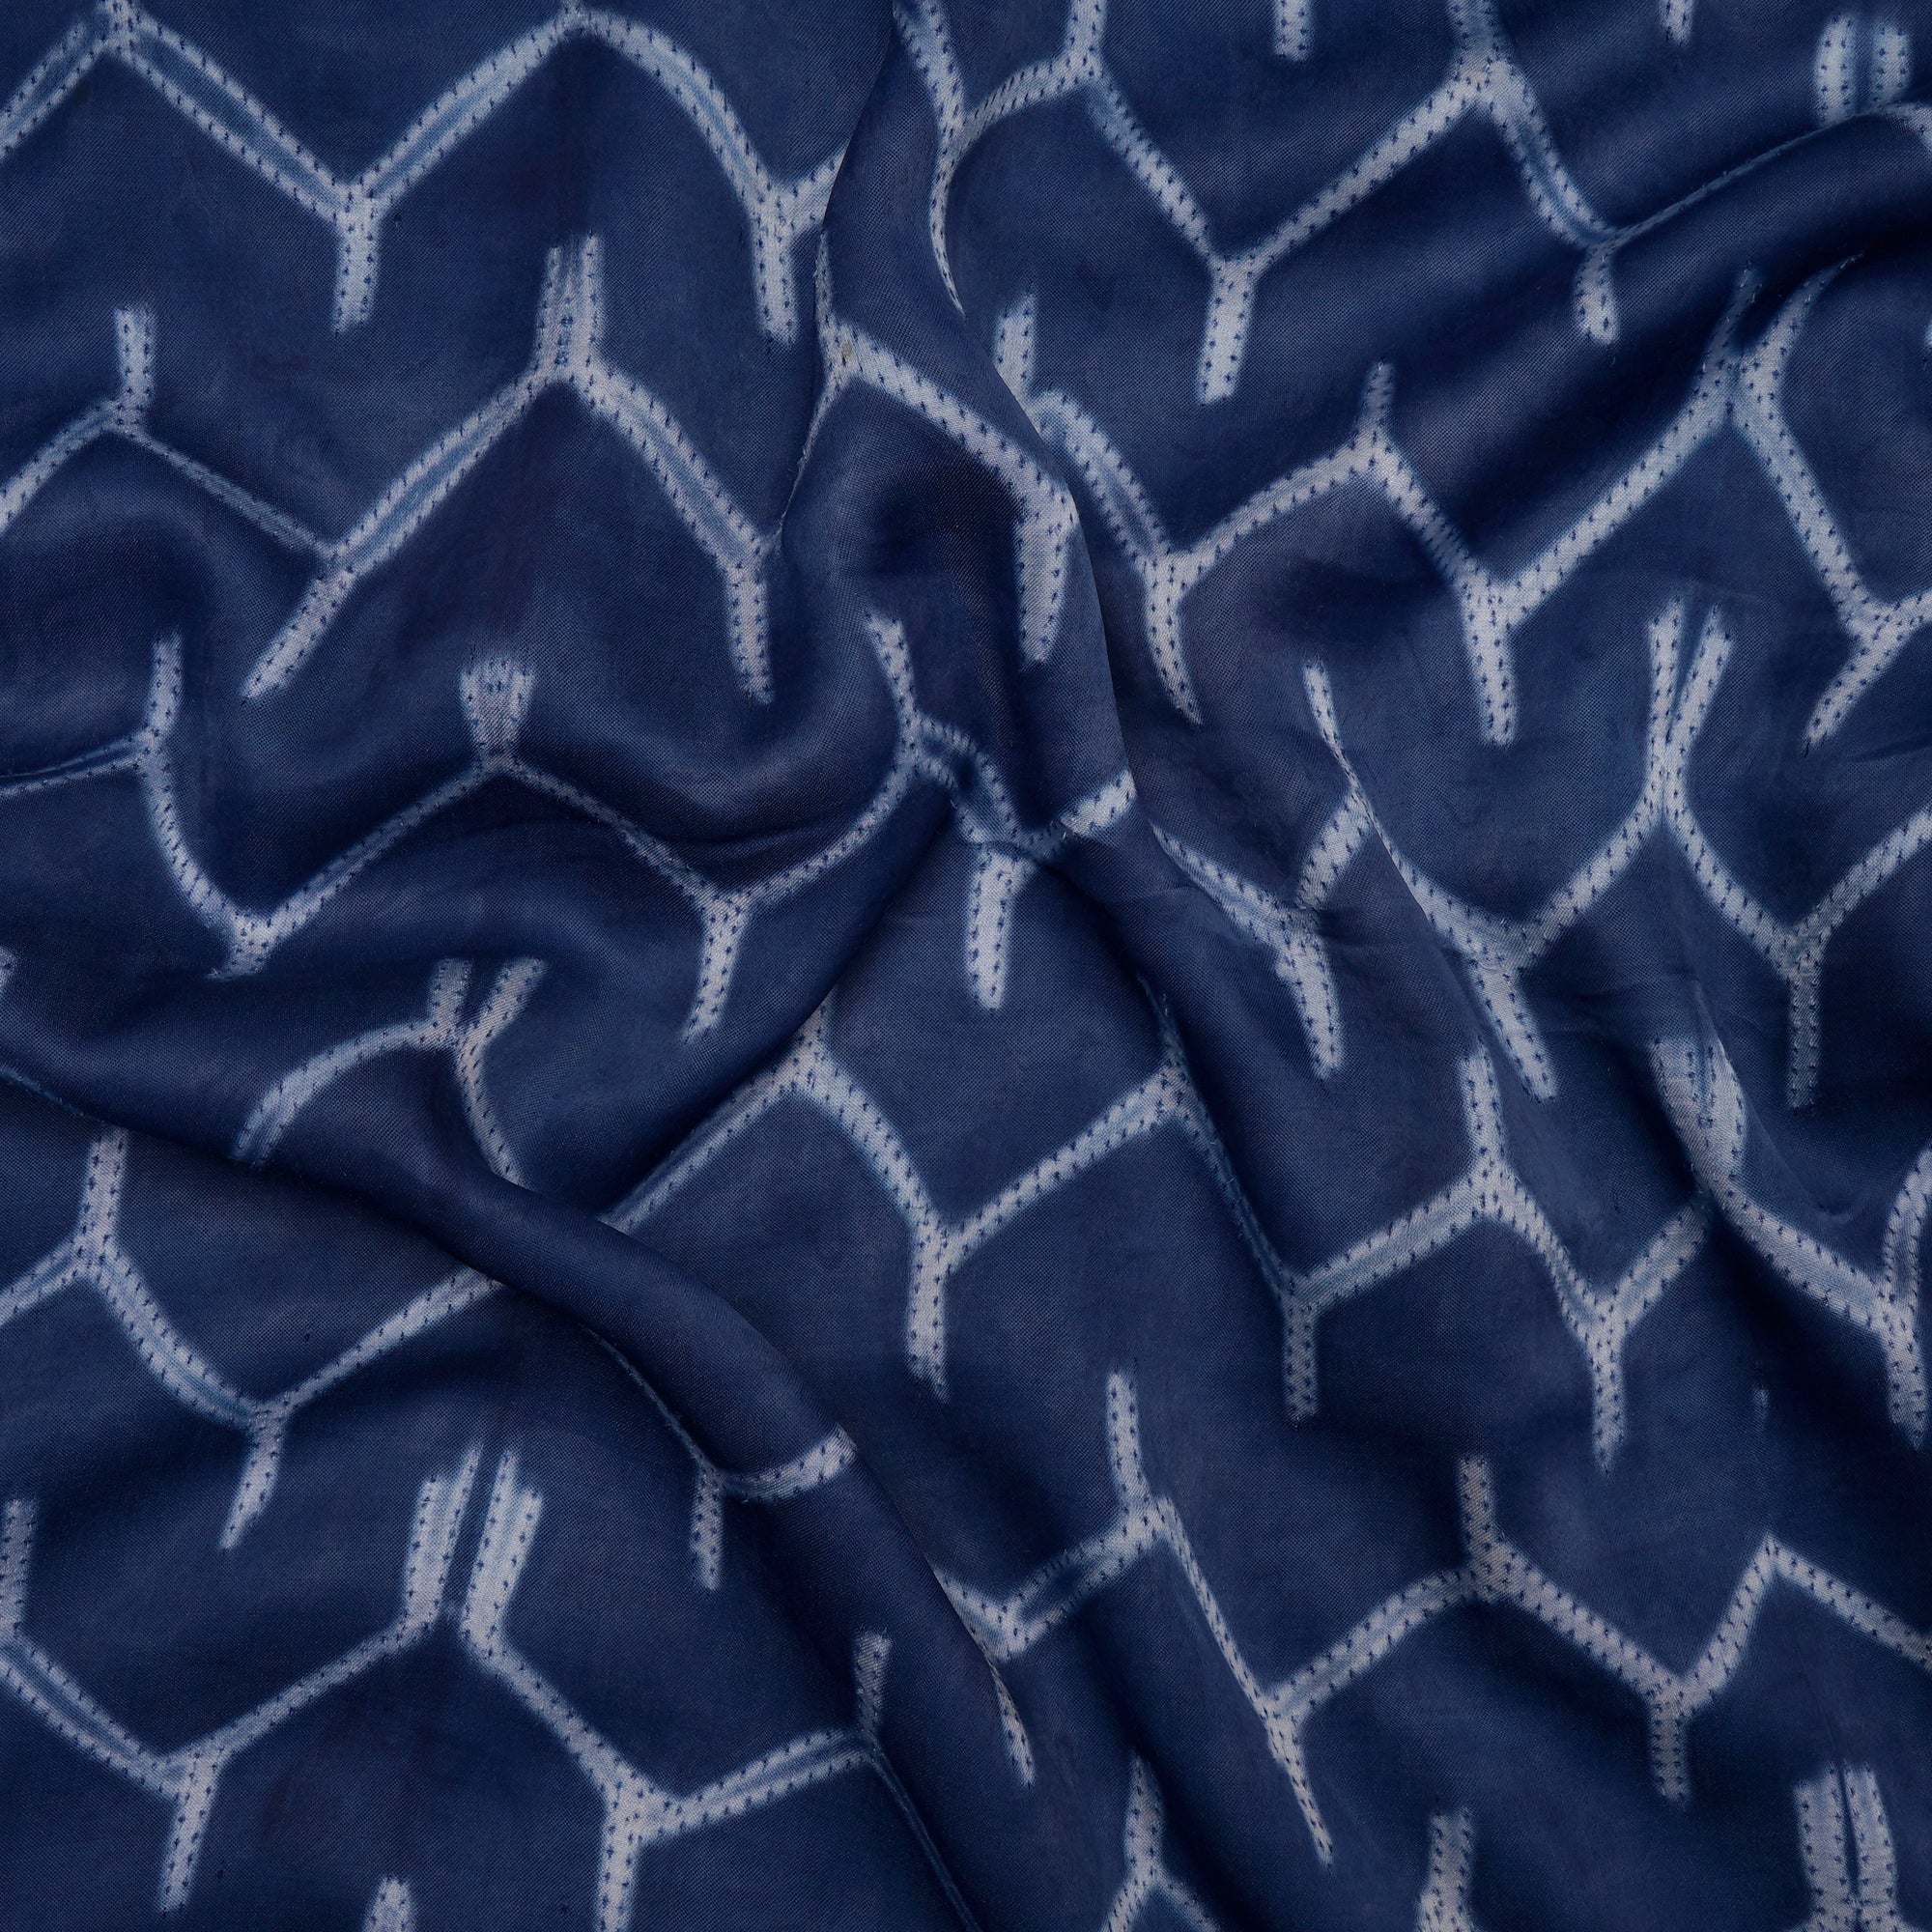 Deep Blue Natural Dye Hand Crafted Shibori Modal Fabric